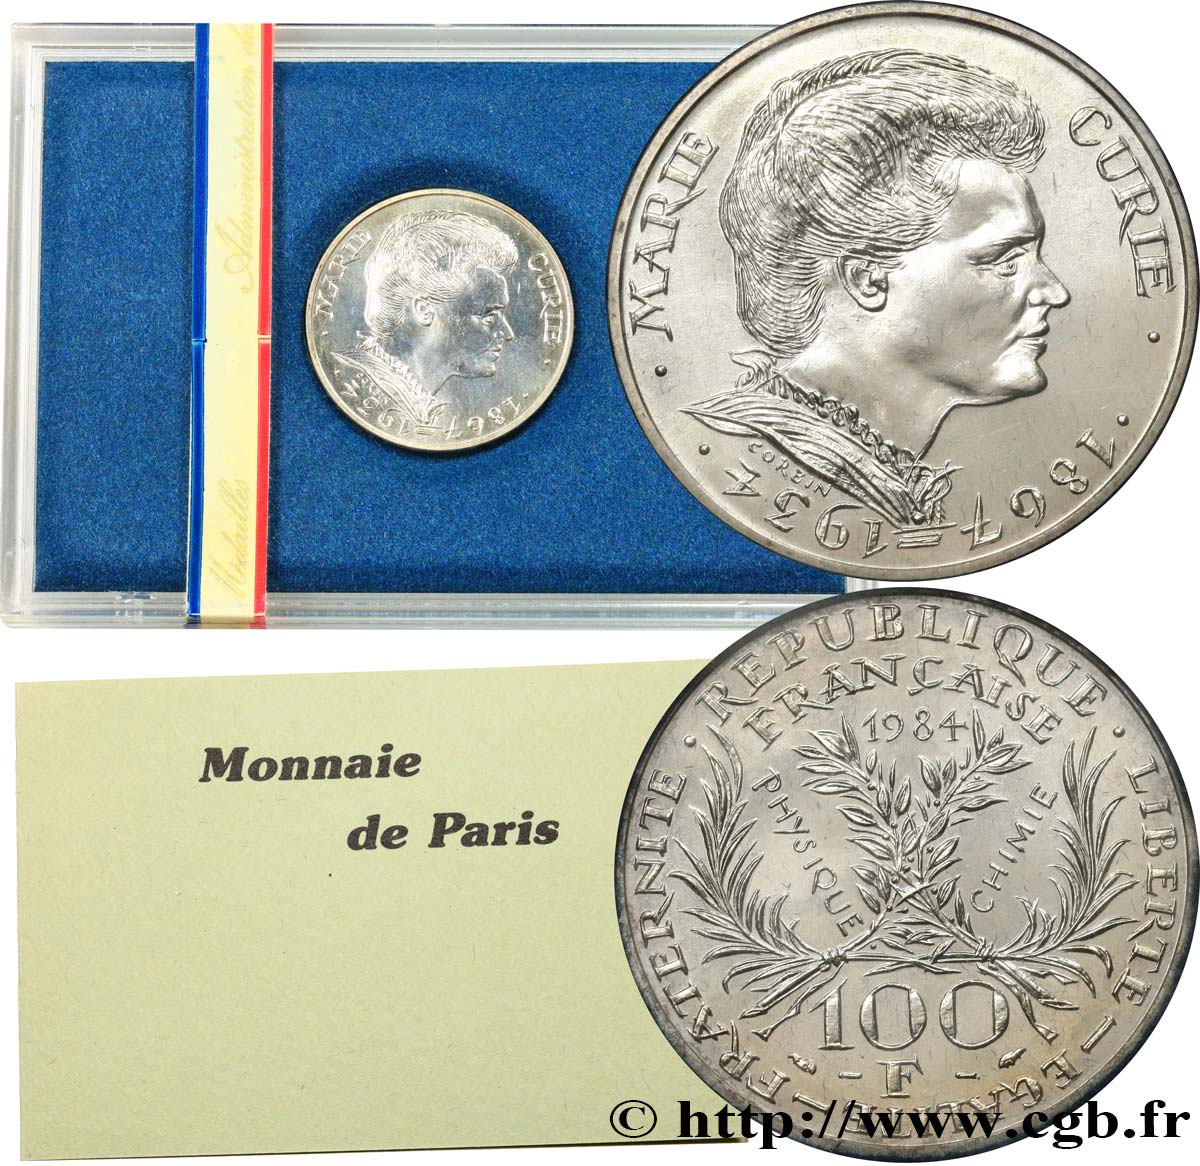 Brillant Universel 100 francs - Marie Curie  1984  F.1600 3 MS 